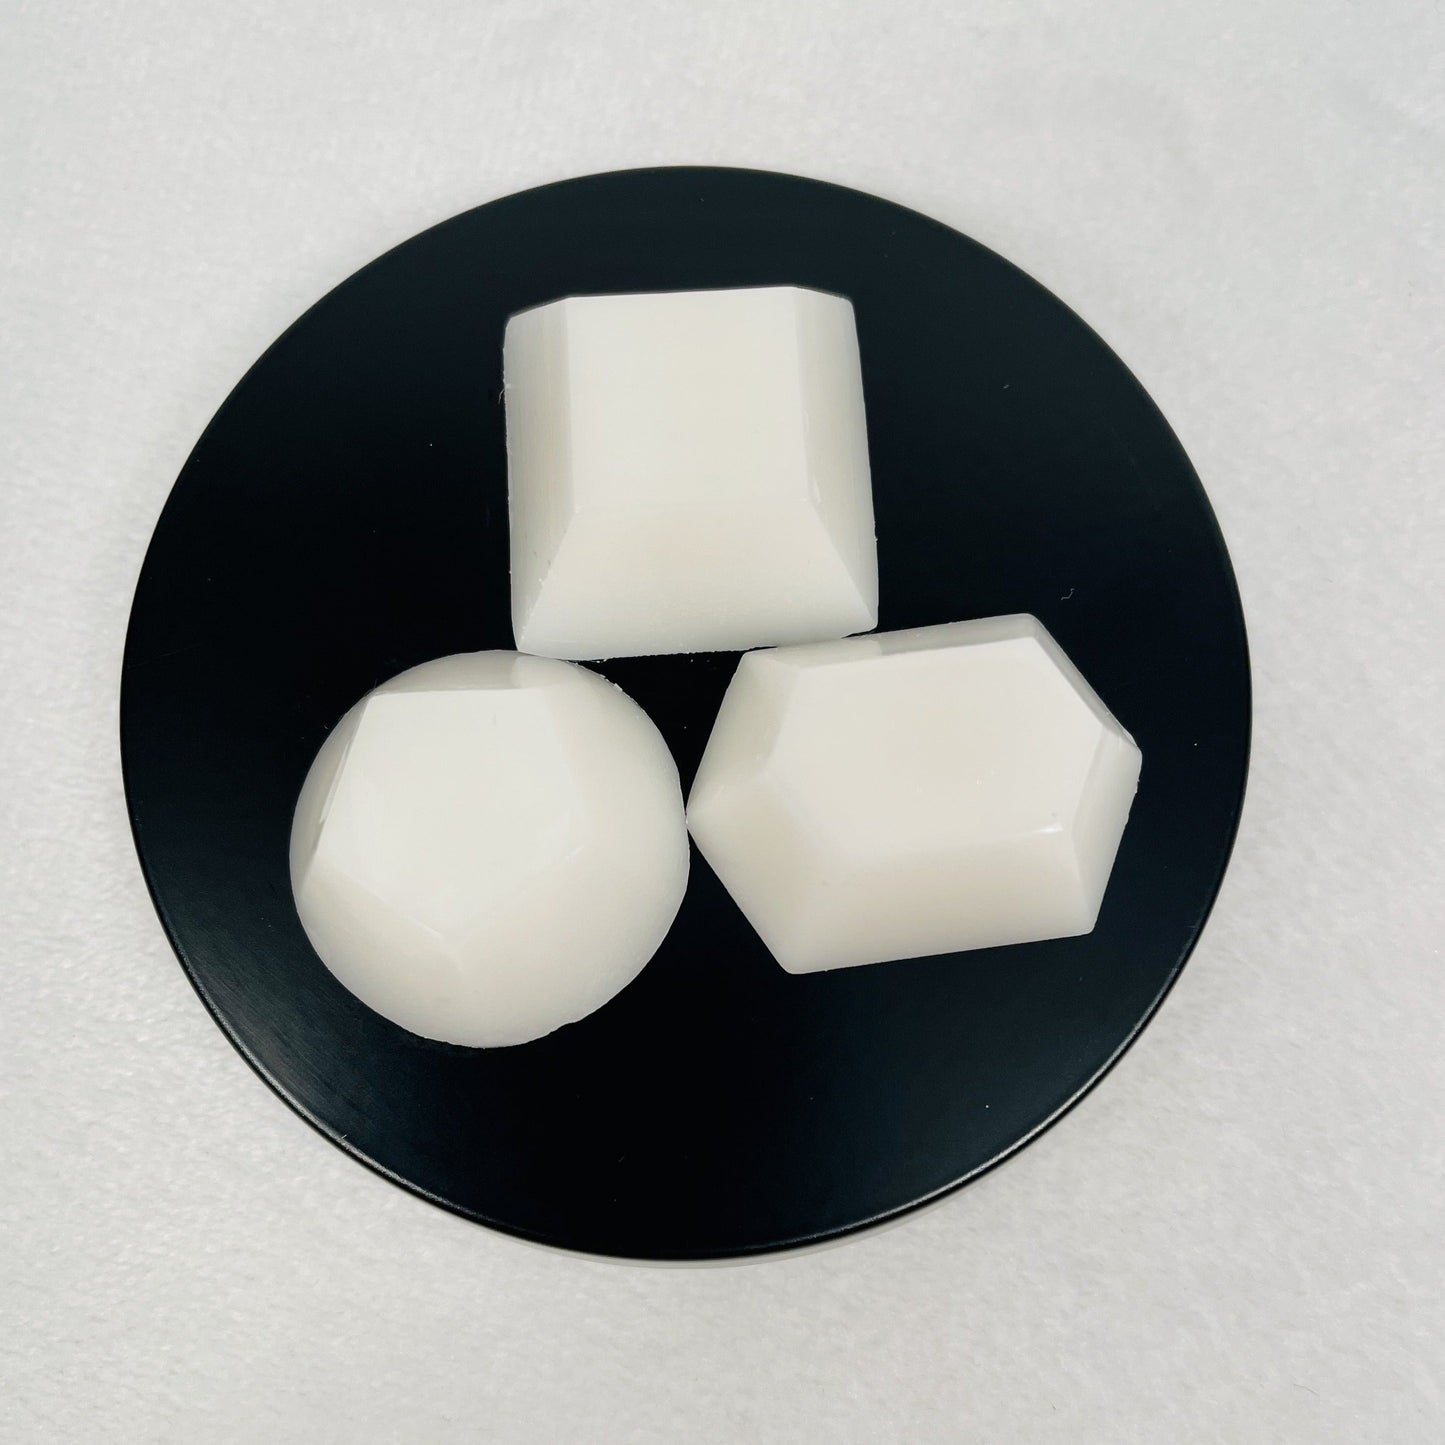 Three different wax melt shapes sitting on top of a black tin lid.